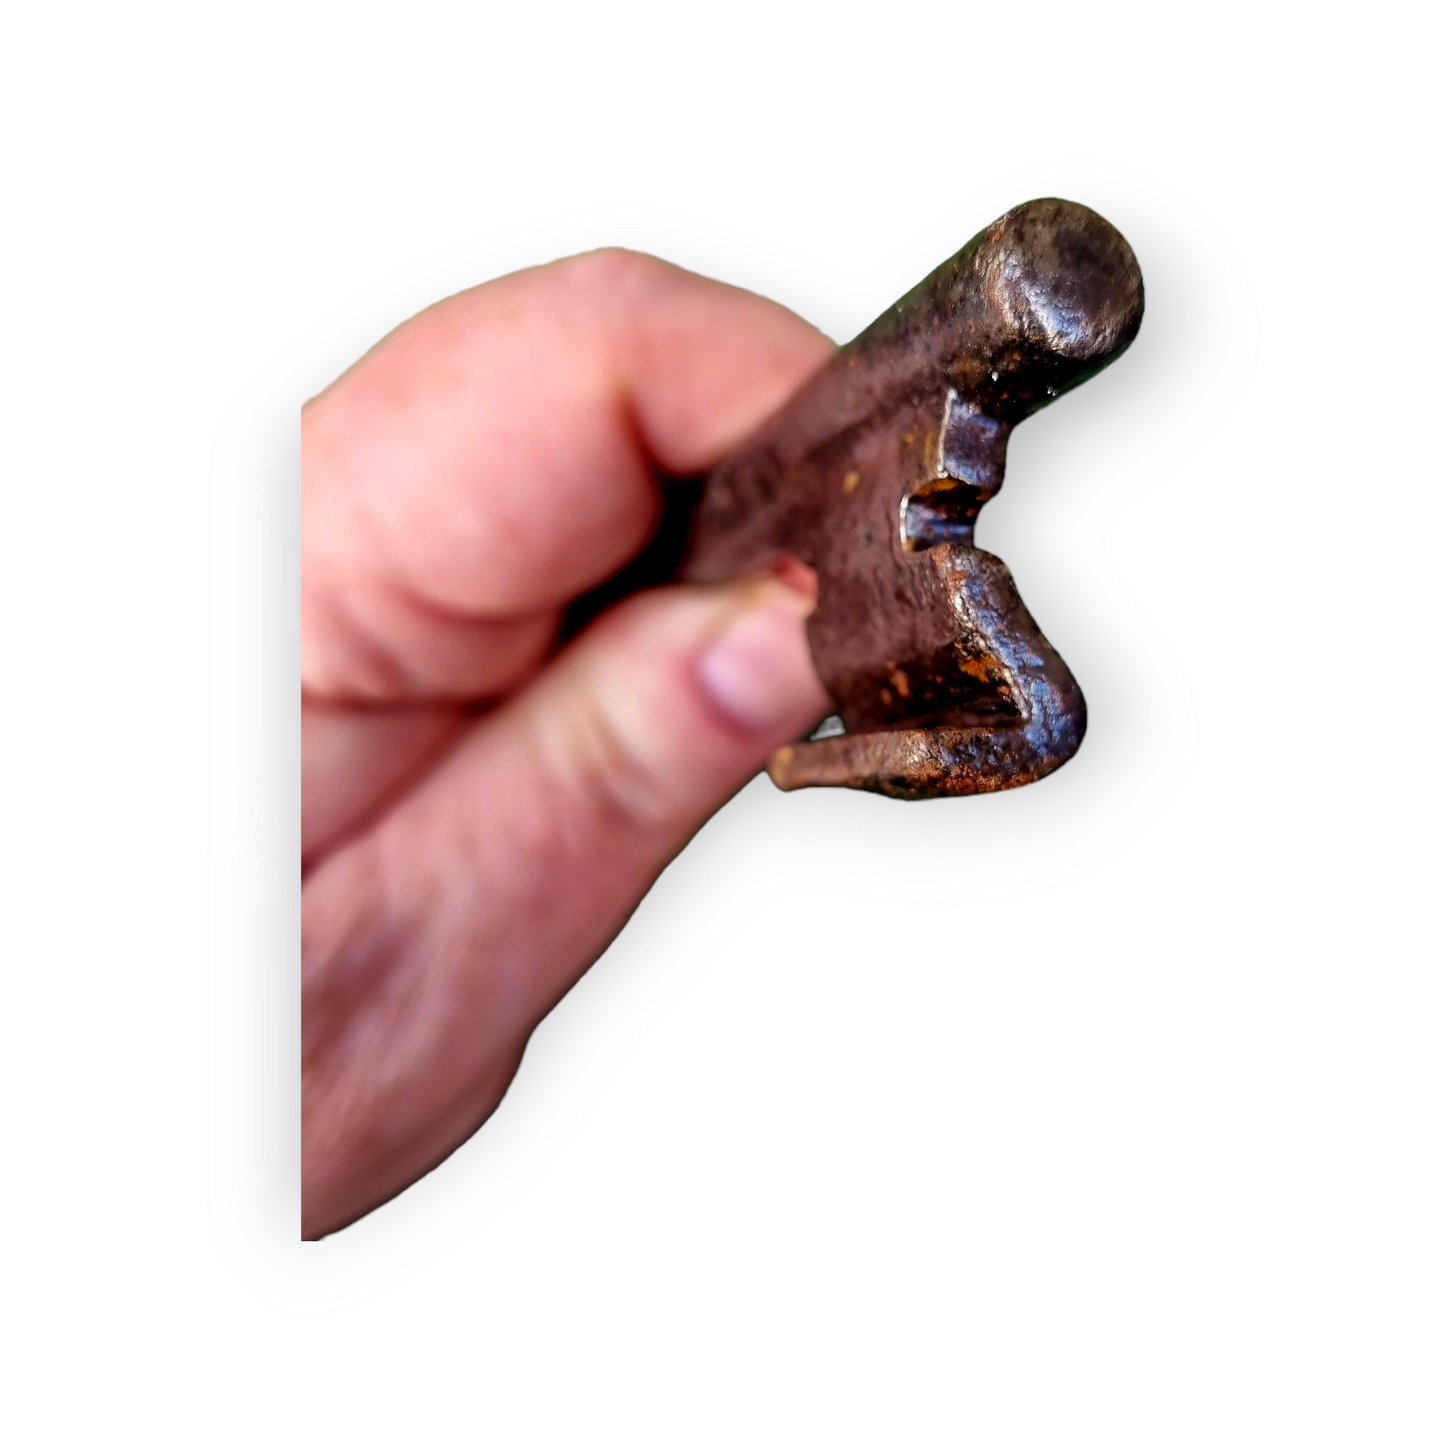 Large 18thC Antique Iron Skeleton Key / Door Key